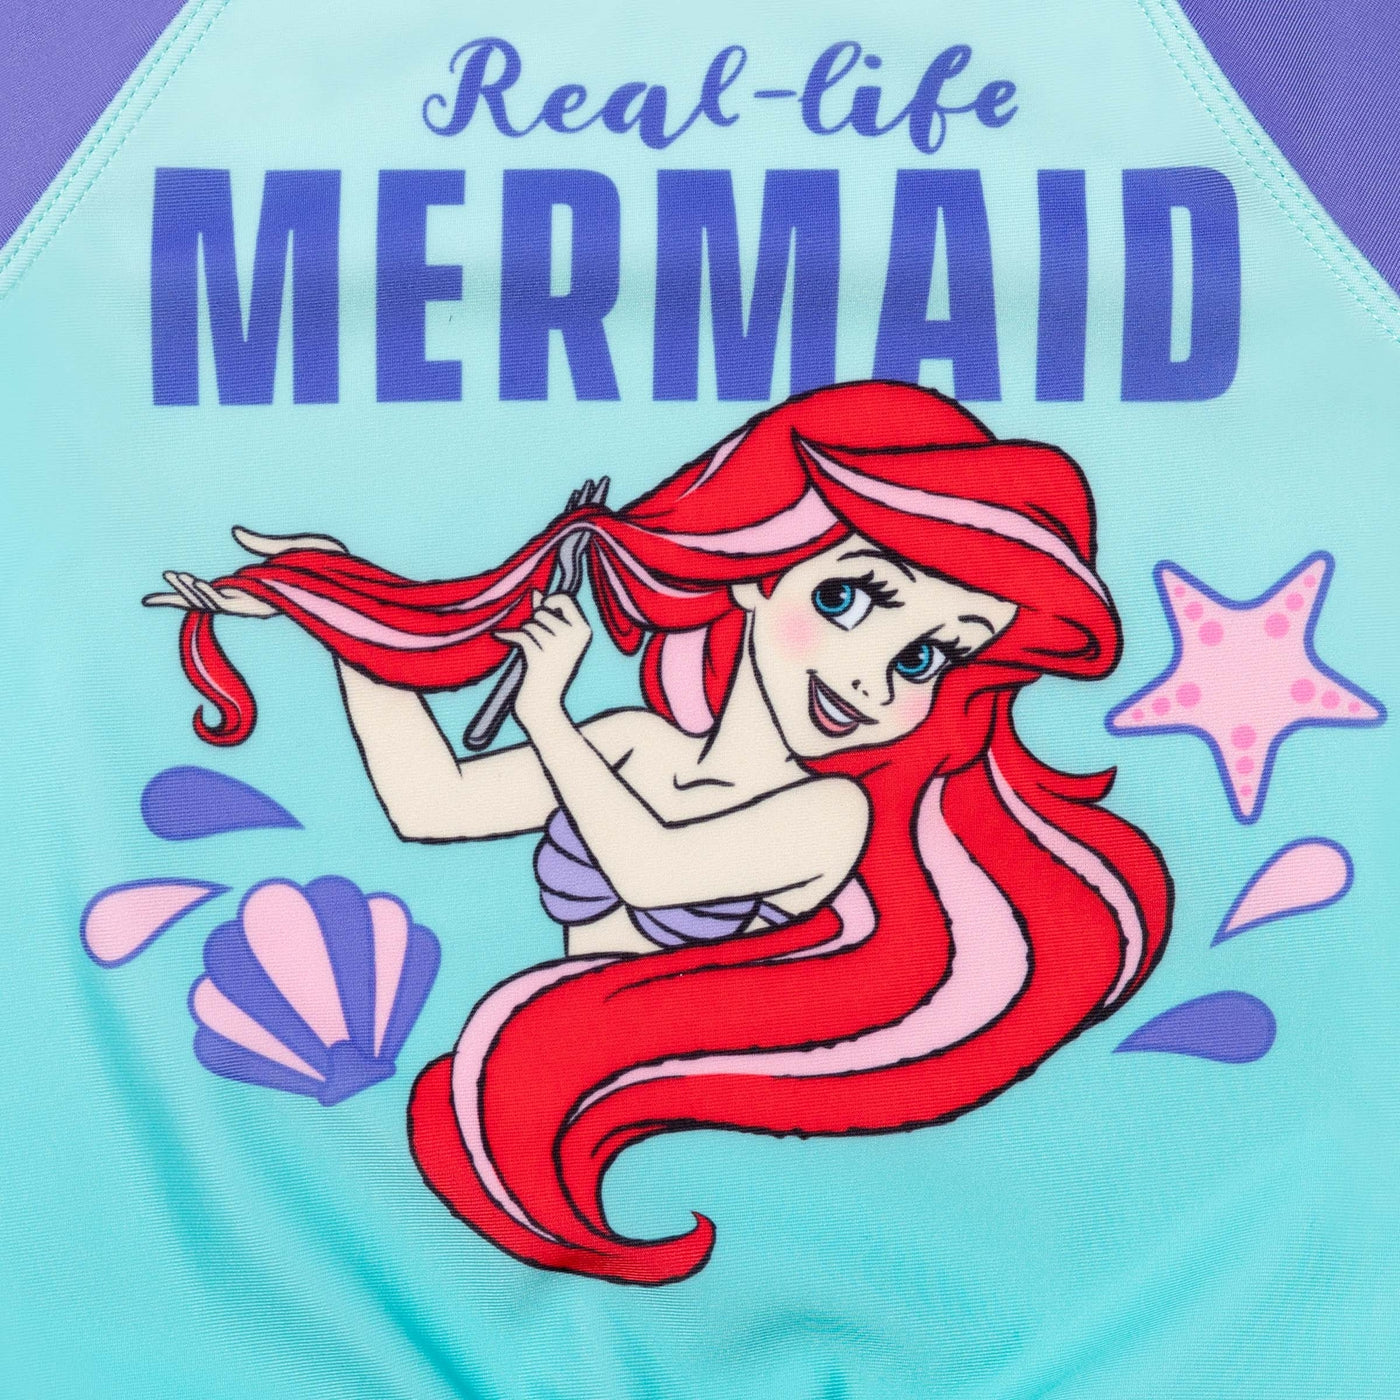 The Little Mermaid Princess Ariel One Piece Bathing Suit Rash Guard Tankini Top Swim Skirt Modest Swimsuit and Bikini Bottom 5 Set